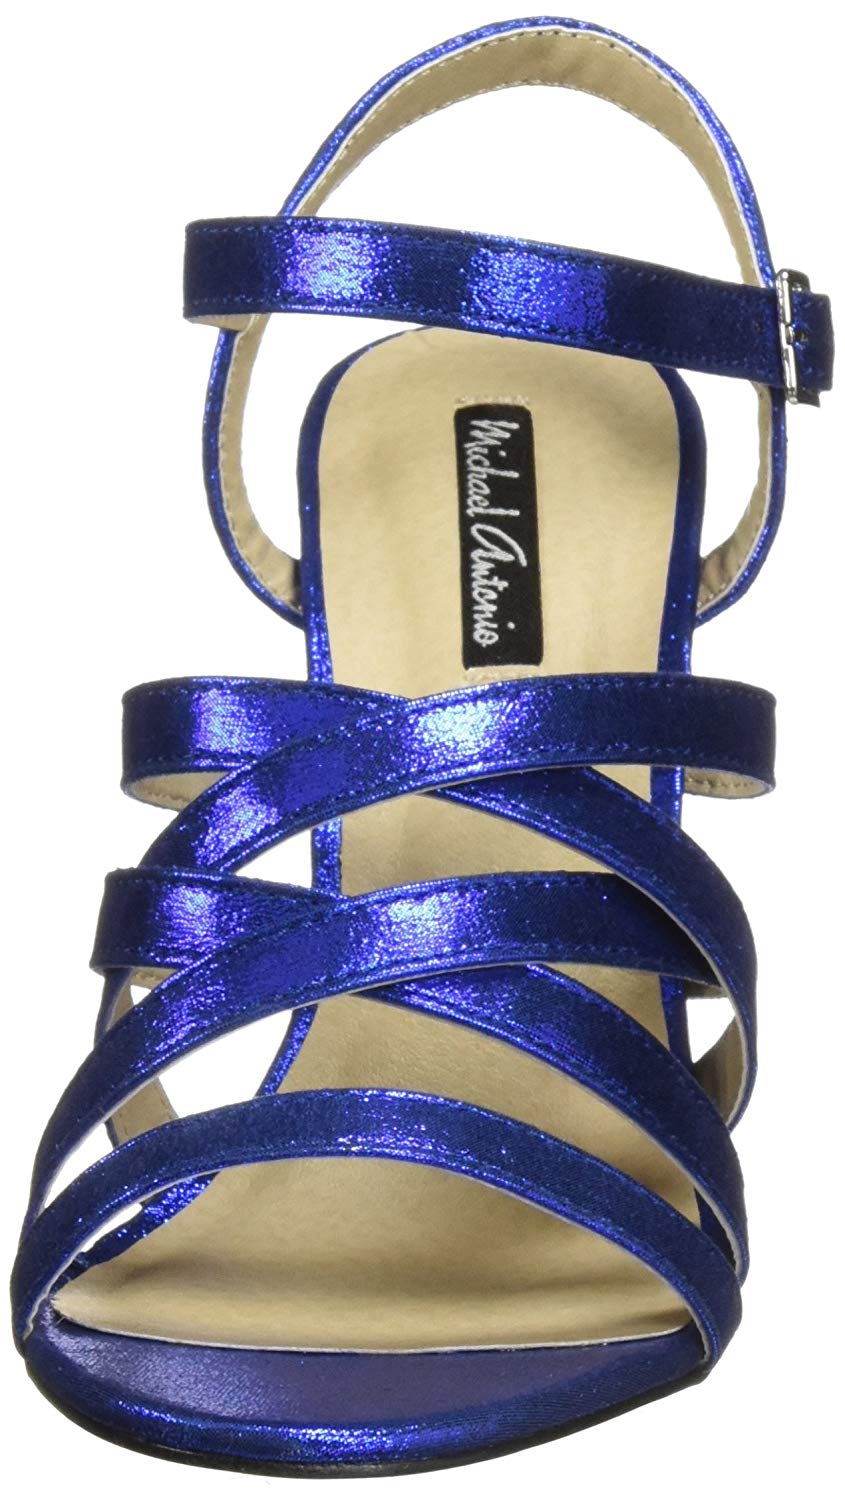 Michael Antonio Women's Shoes Jayla Peep Toe Casual Slingback Sandals - image 3 of 6